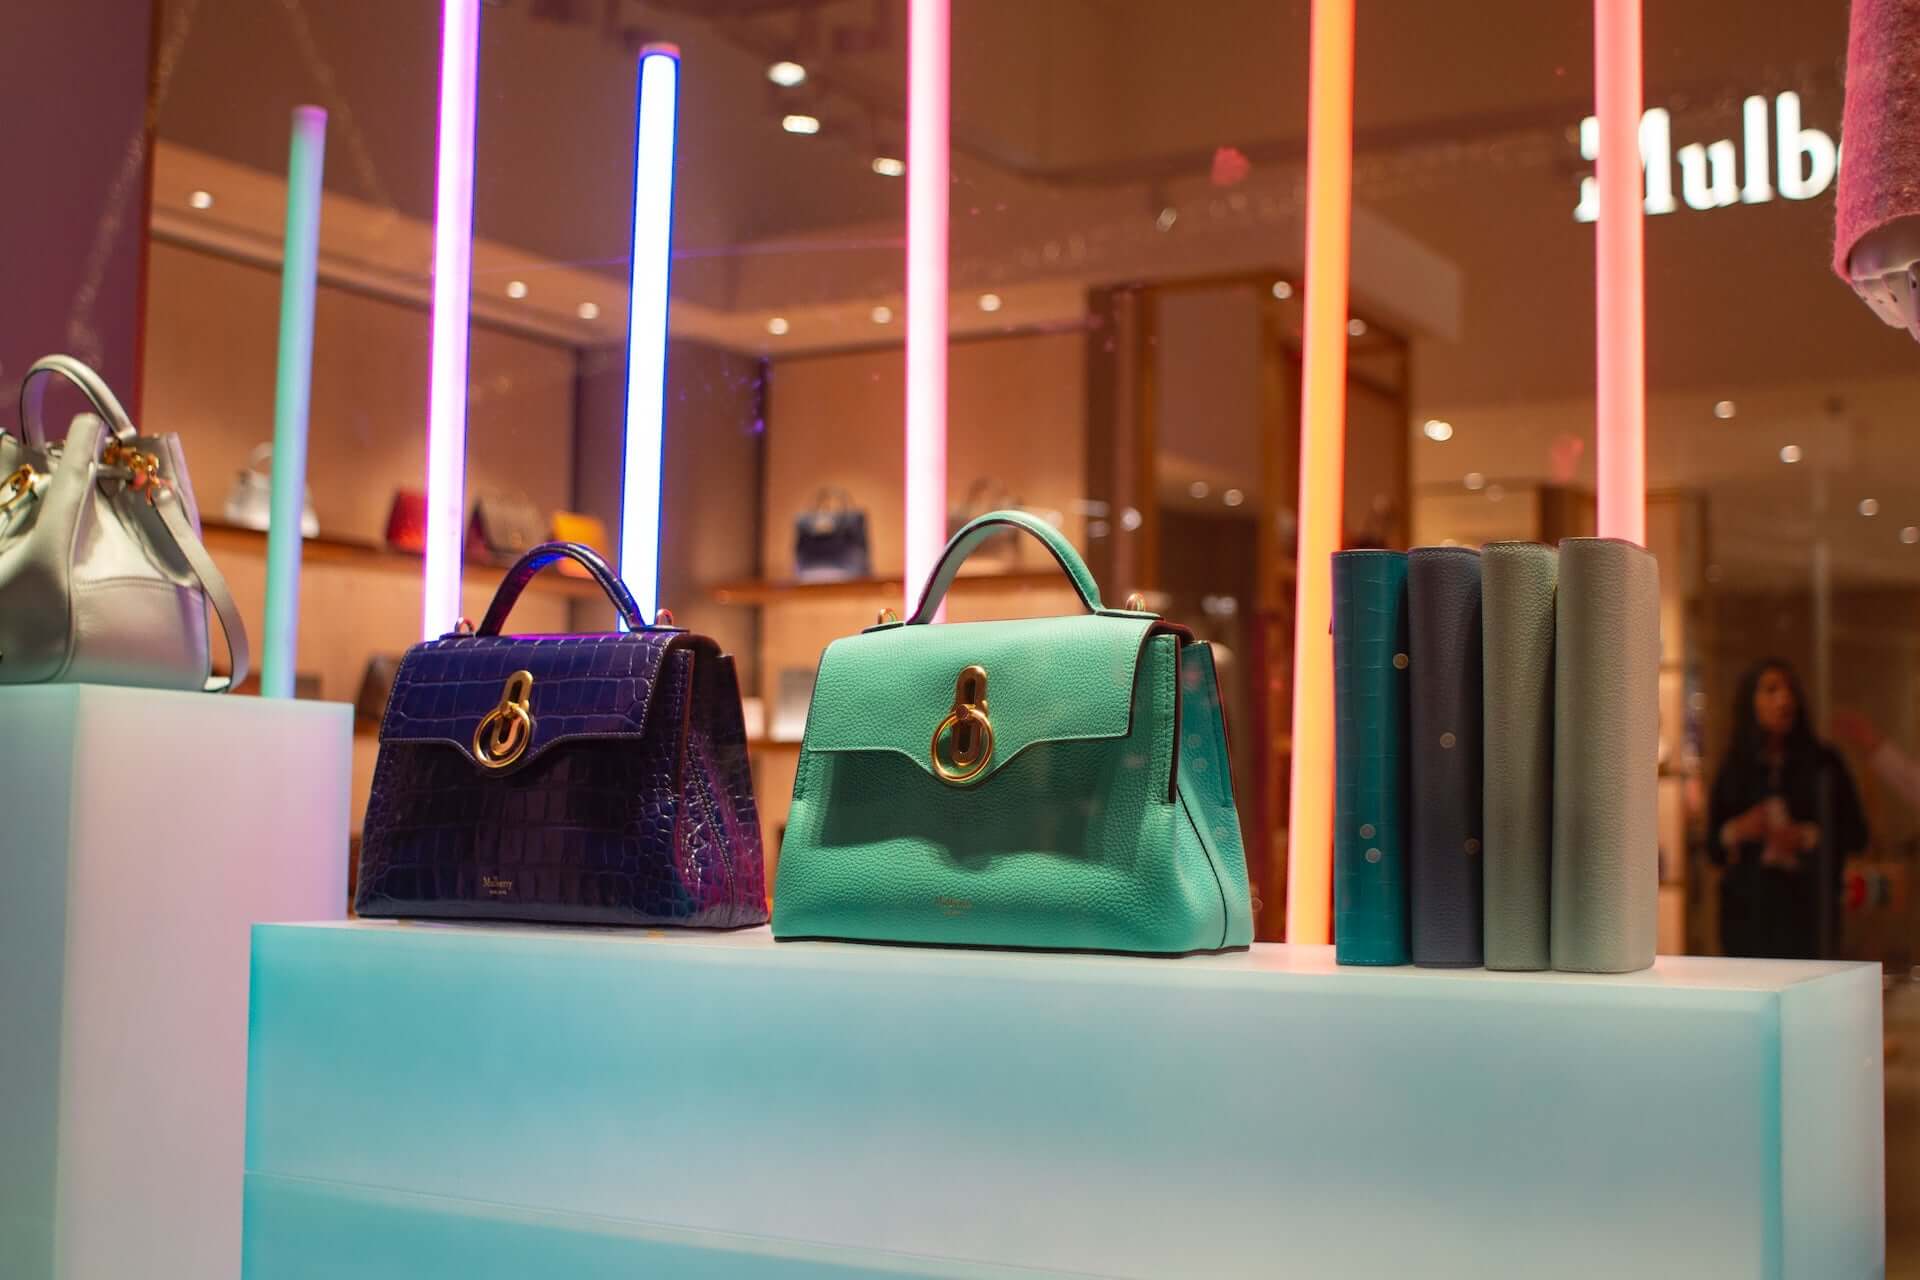 Green and purple handbags on display.